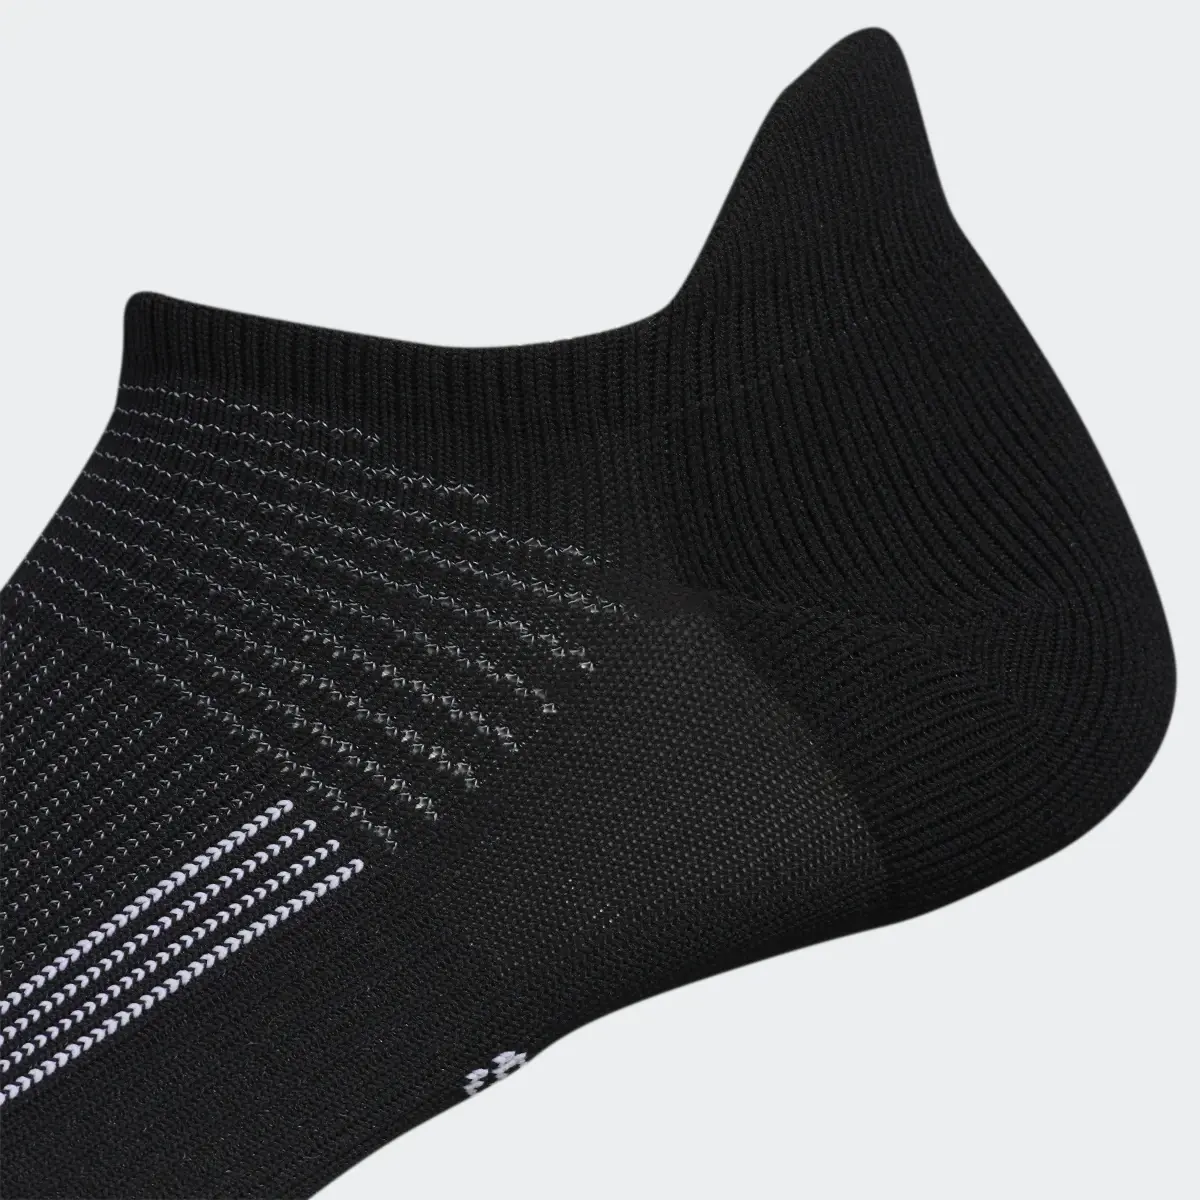 Adidas Superlite Ultraboost Tabbed No-Show Socks 2 Pairs. 3